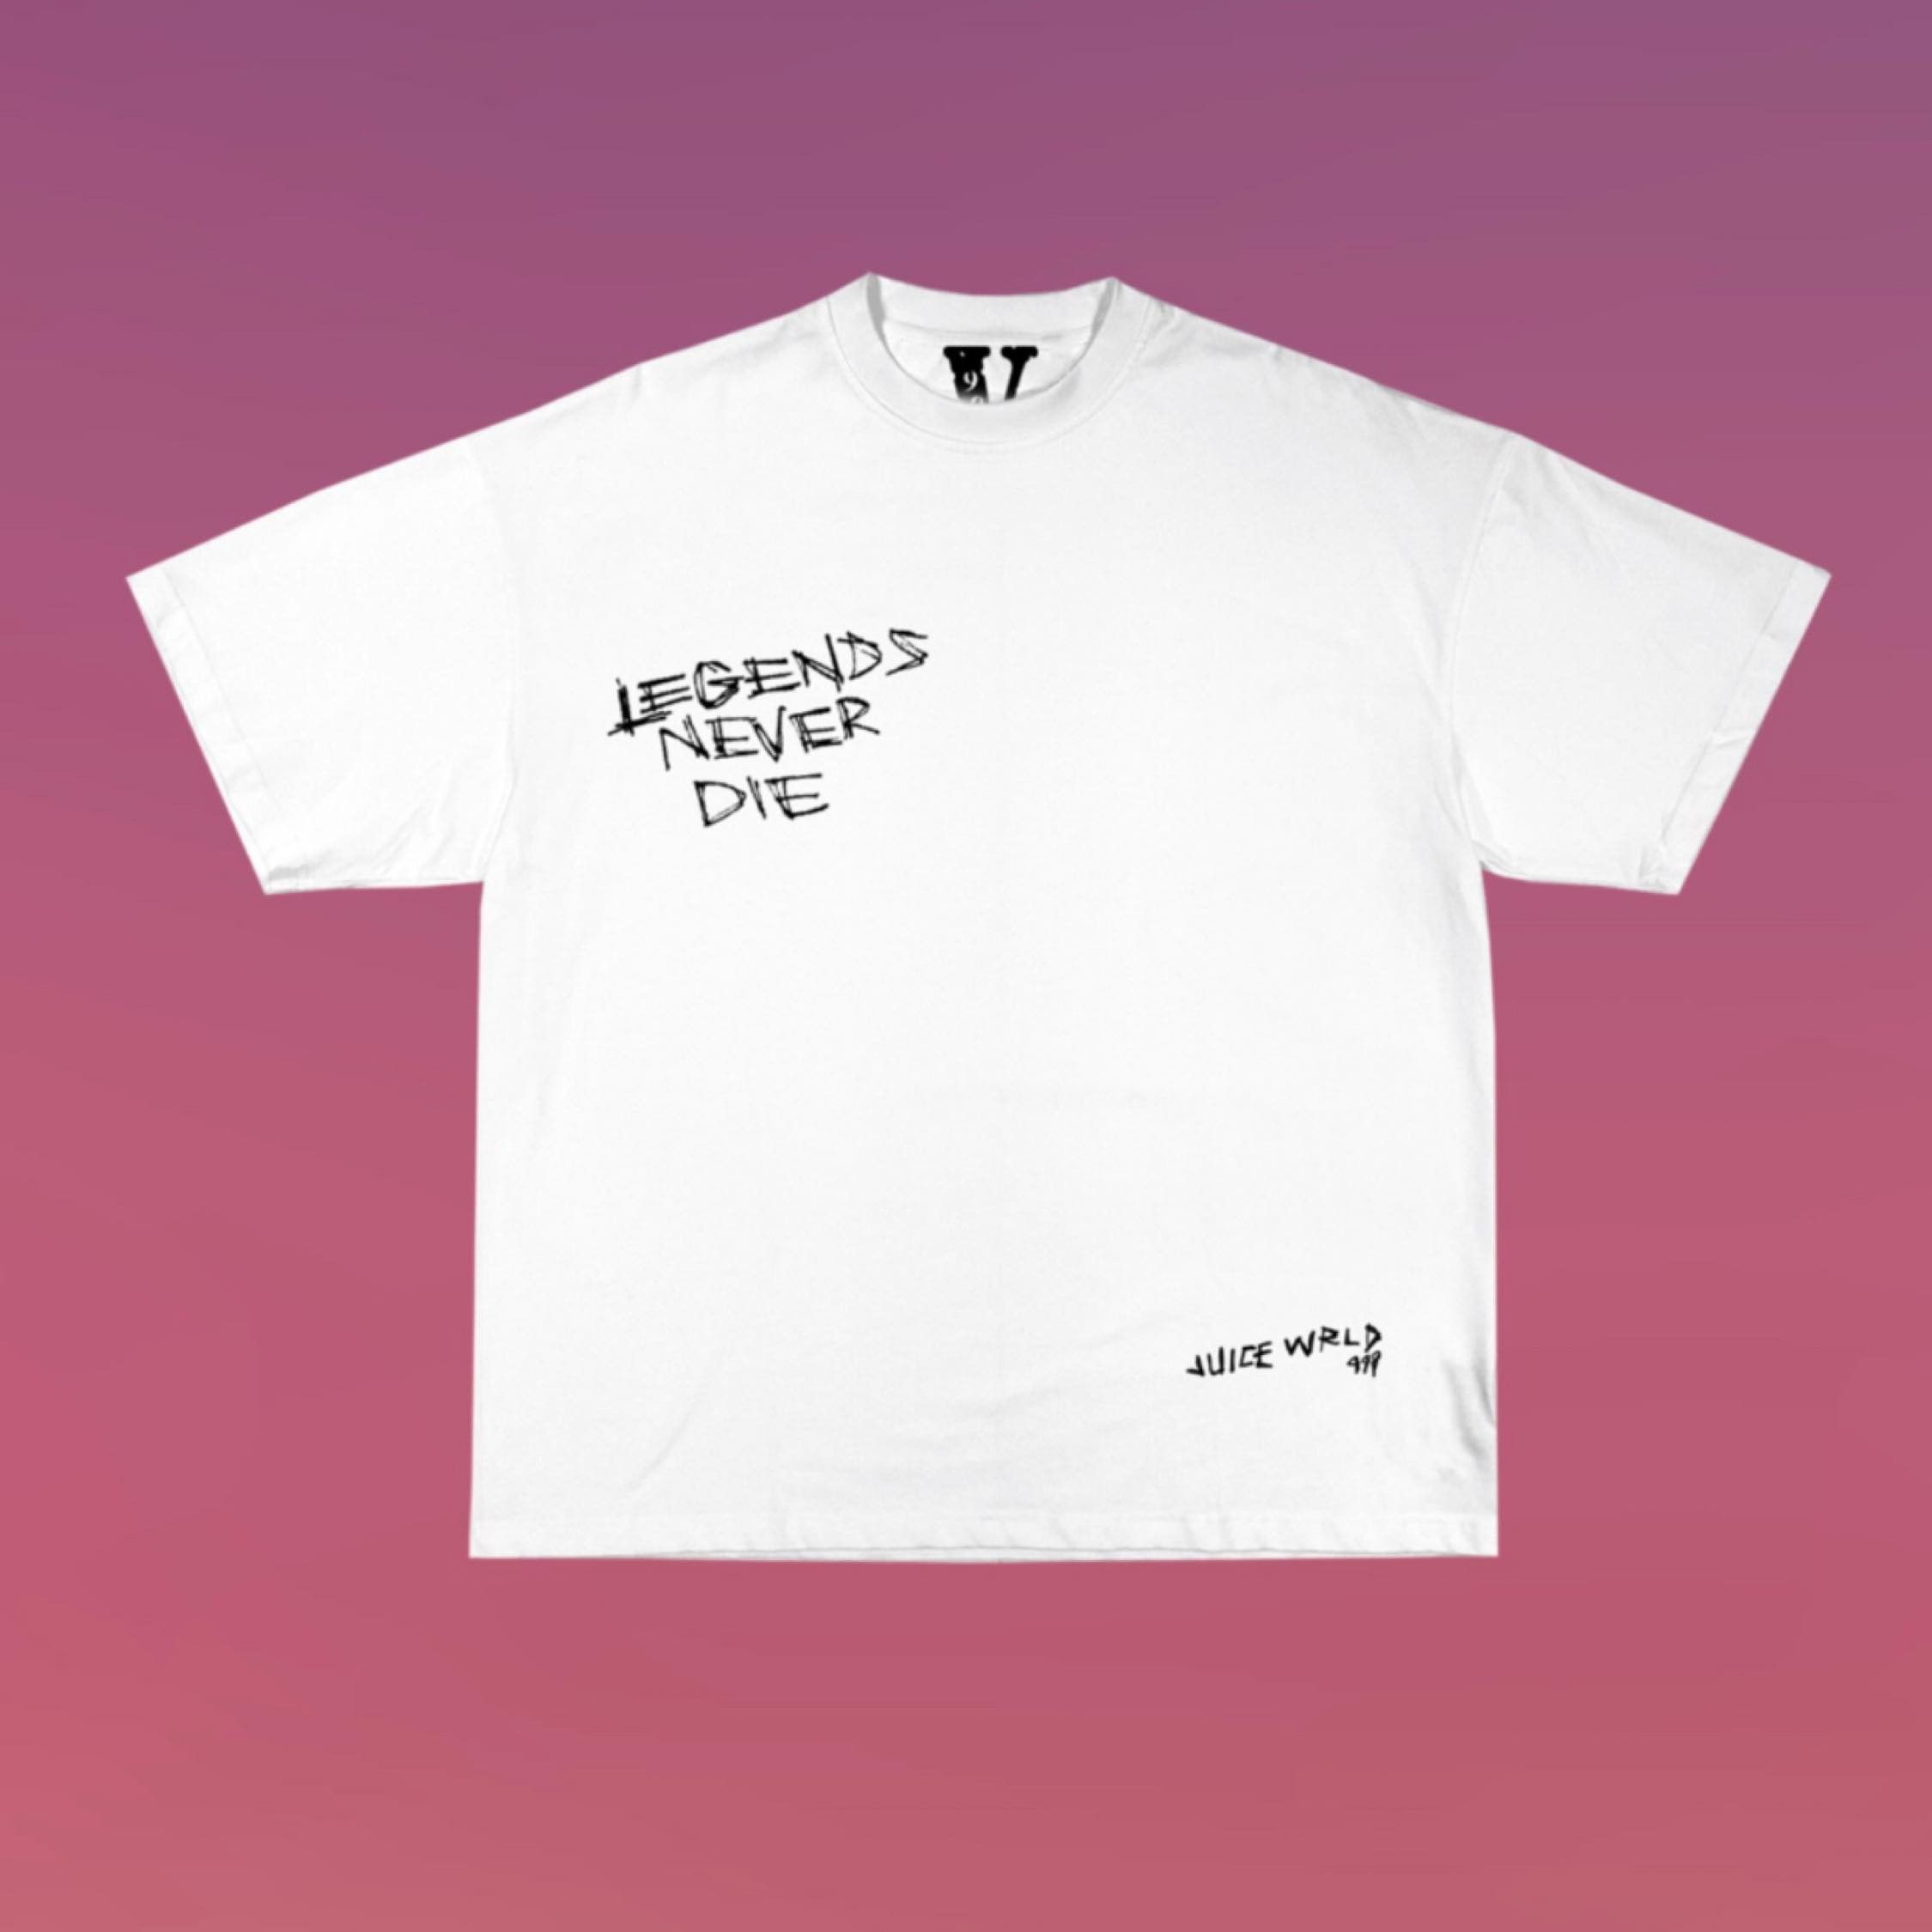 VLONE x Juice Wrld “Legends Never Die” T-Shirt Black